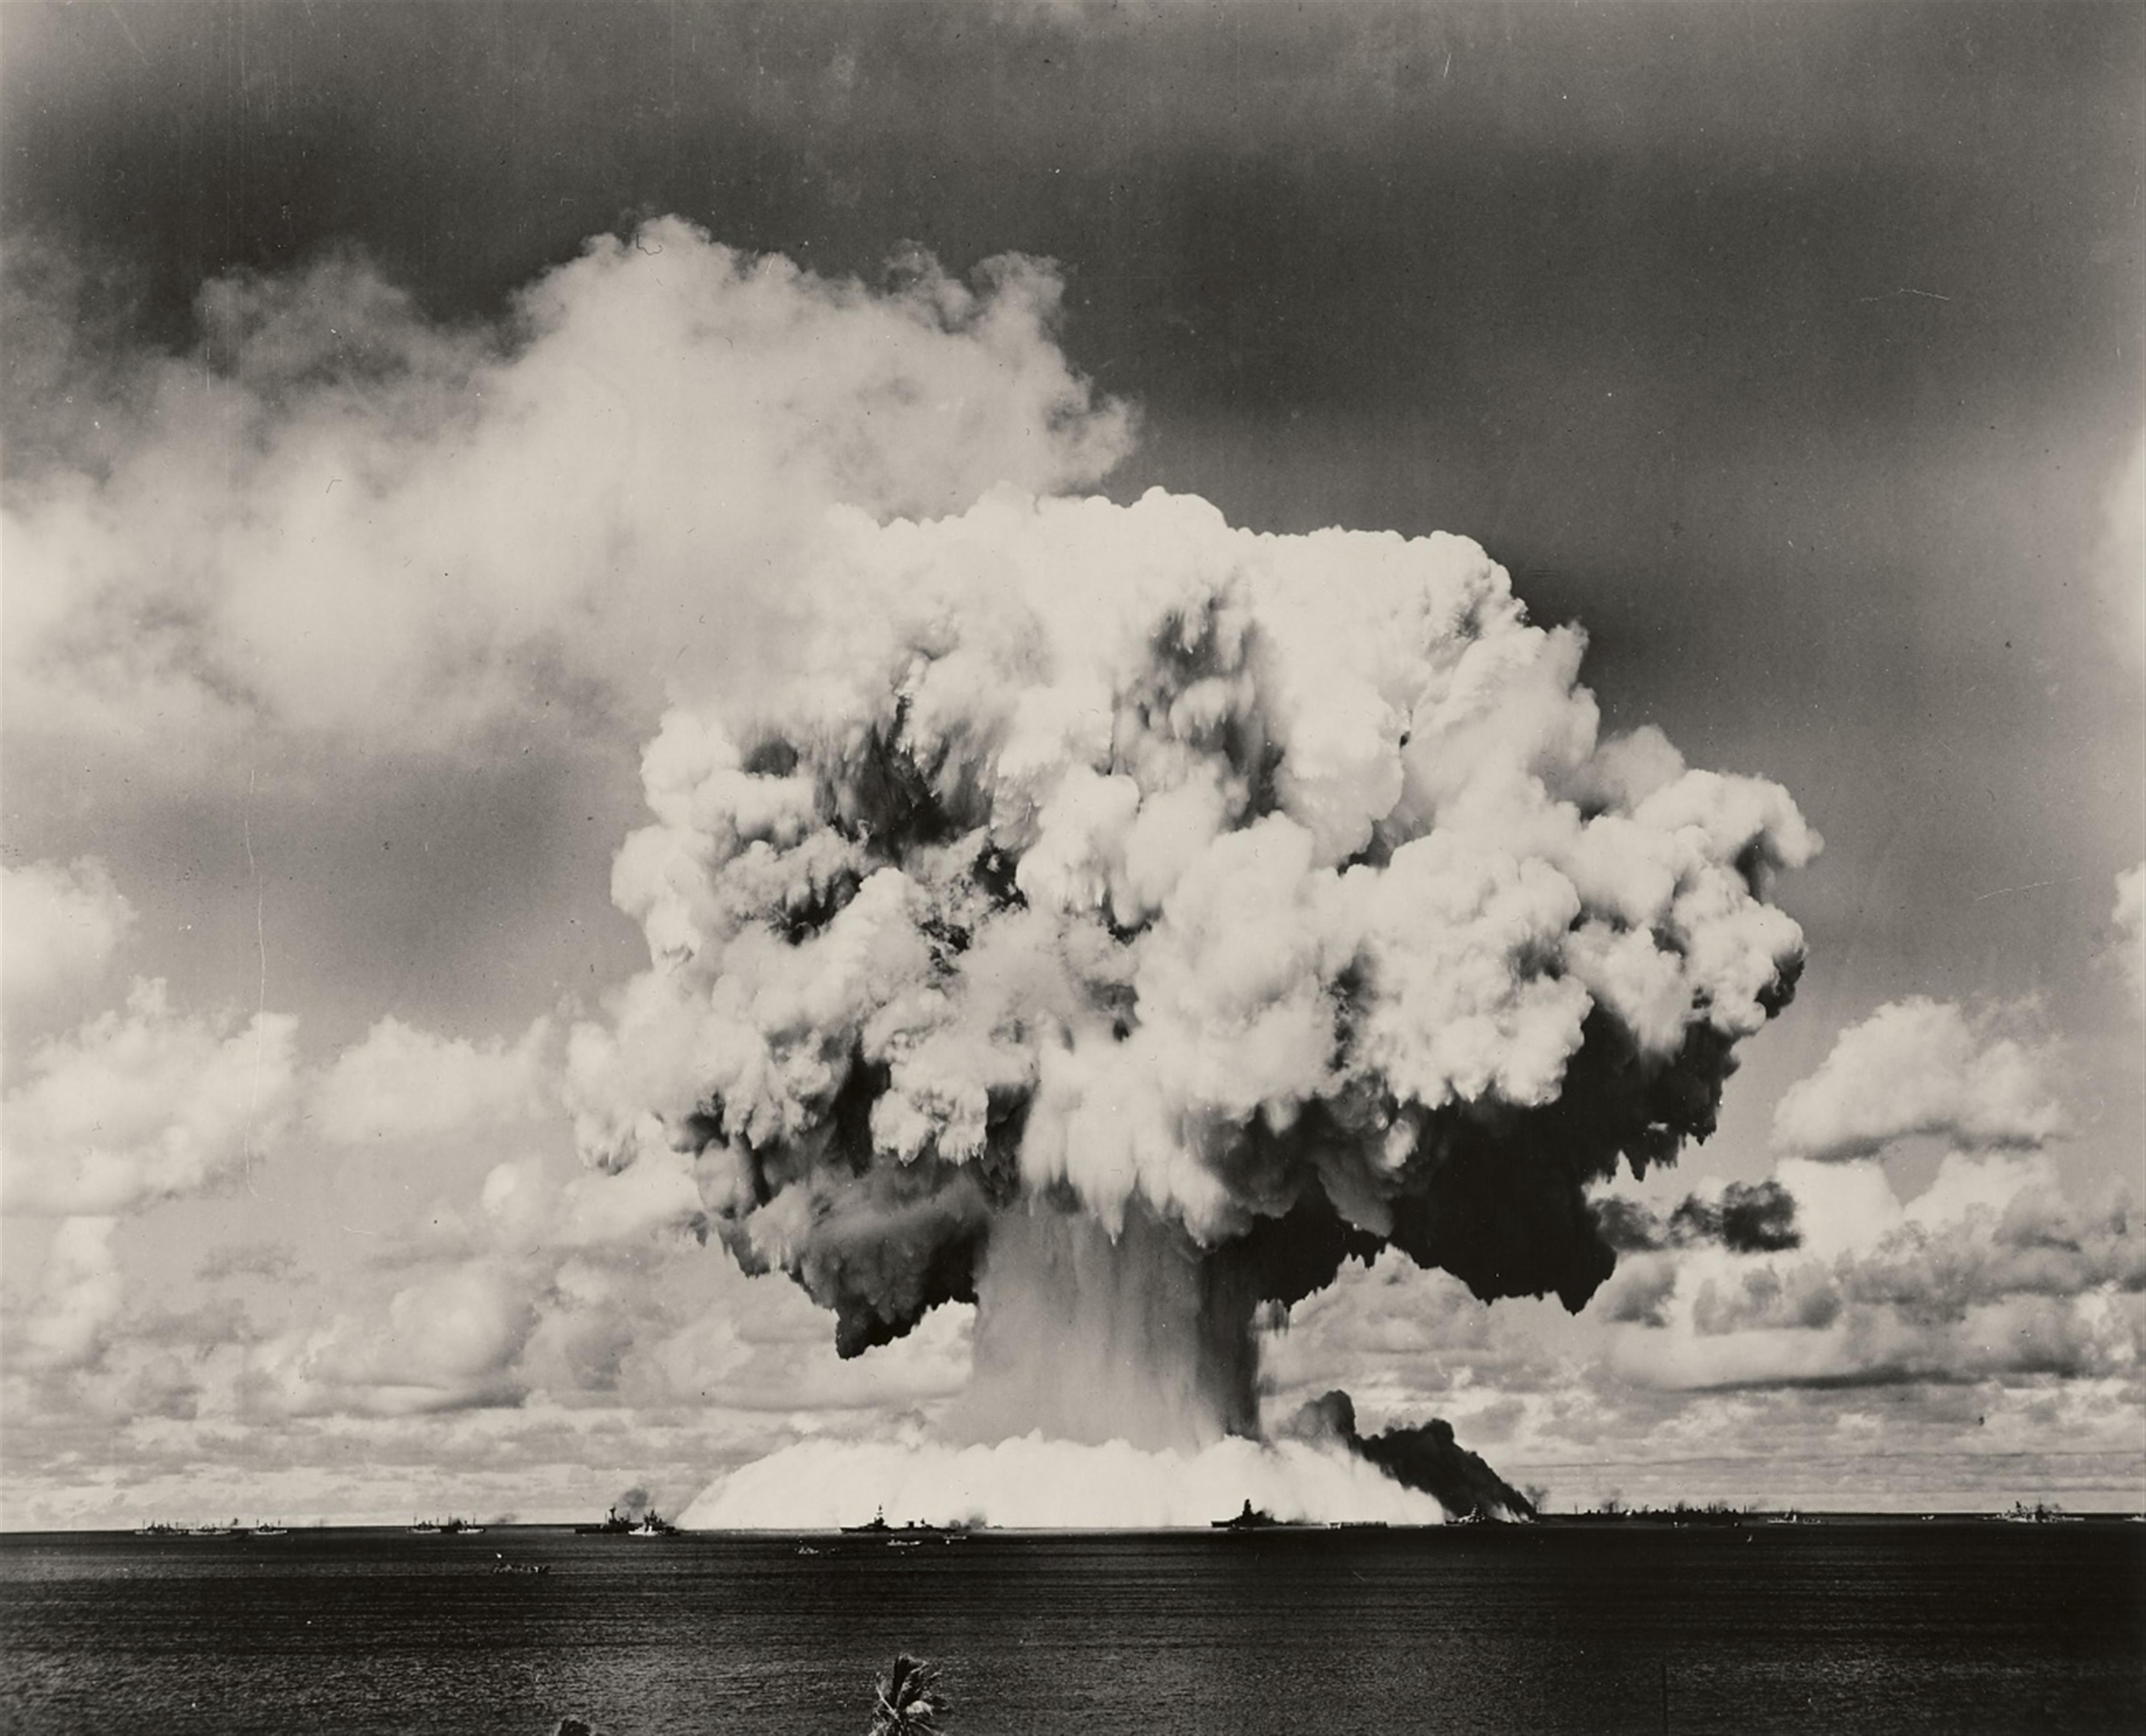 Joint Army Task Force One Photo - "Operation Crossroads" - Aufnahmen der Atombomben-Tests auf dem Bikini-Atoll - image-18